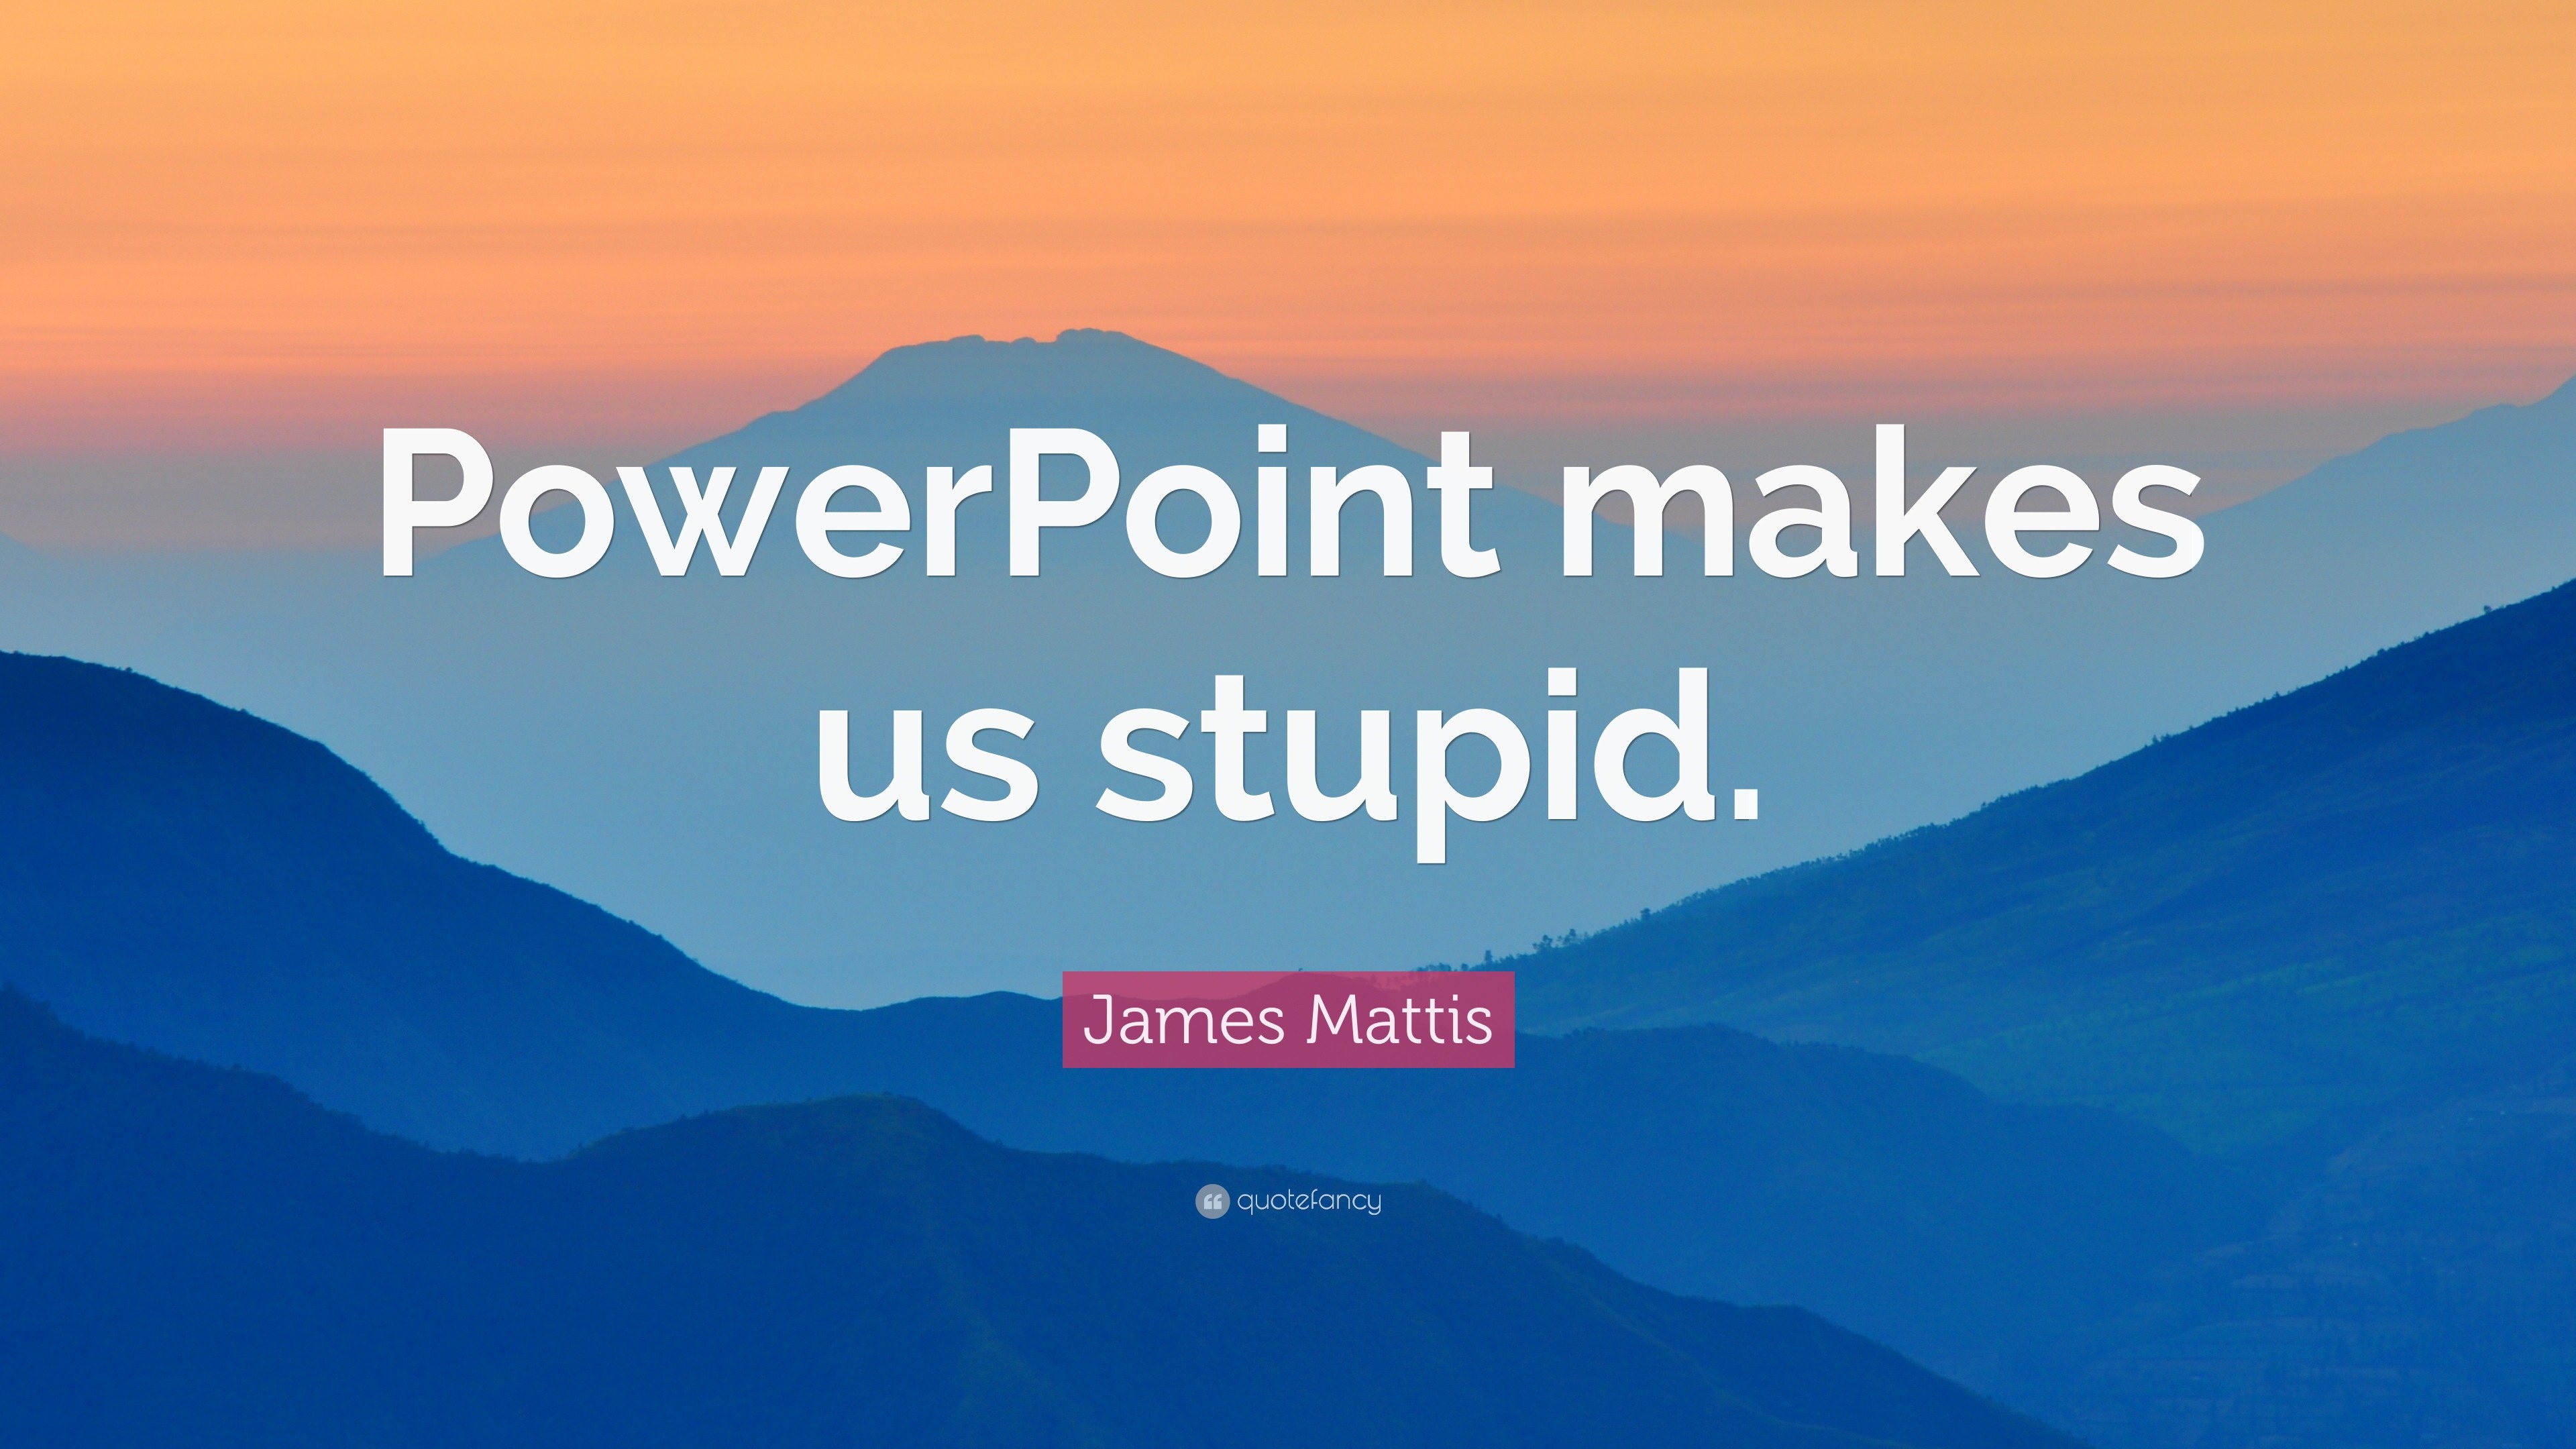 3840x2160 James Mattis Quote: “PowerPoint makes us stupid.”